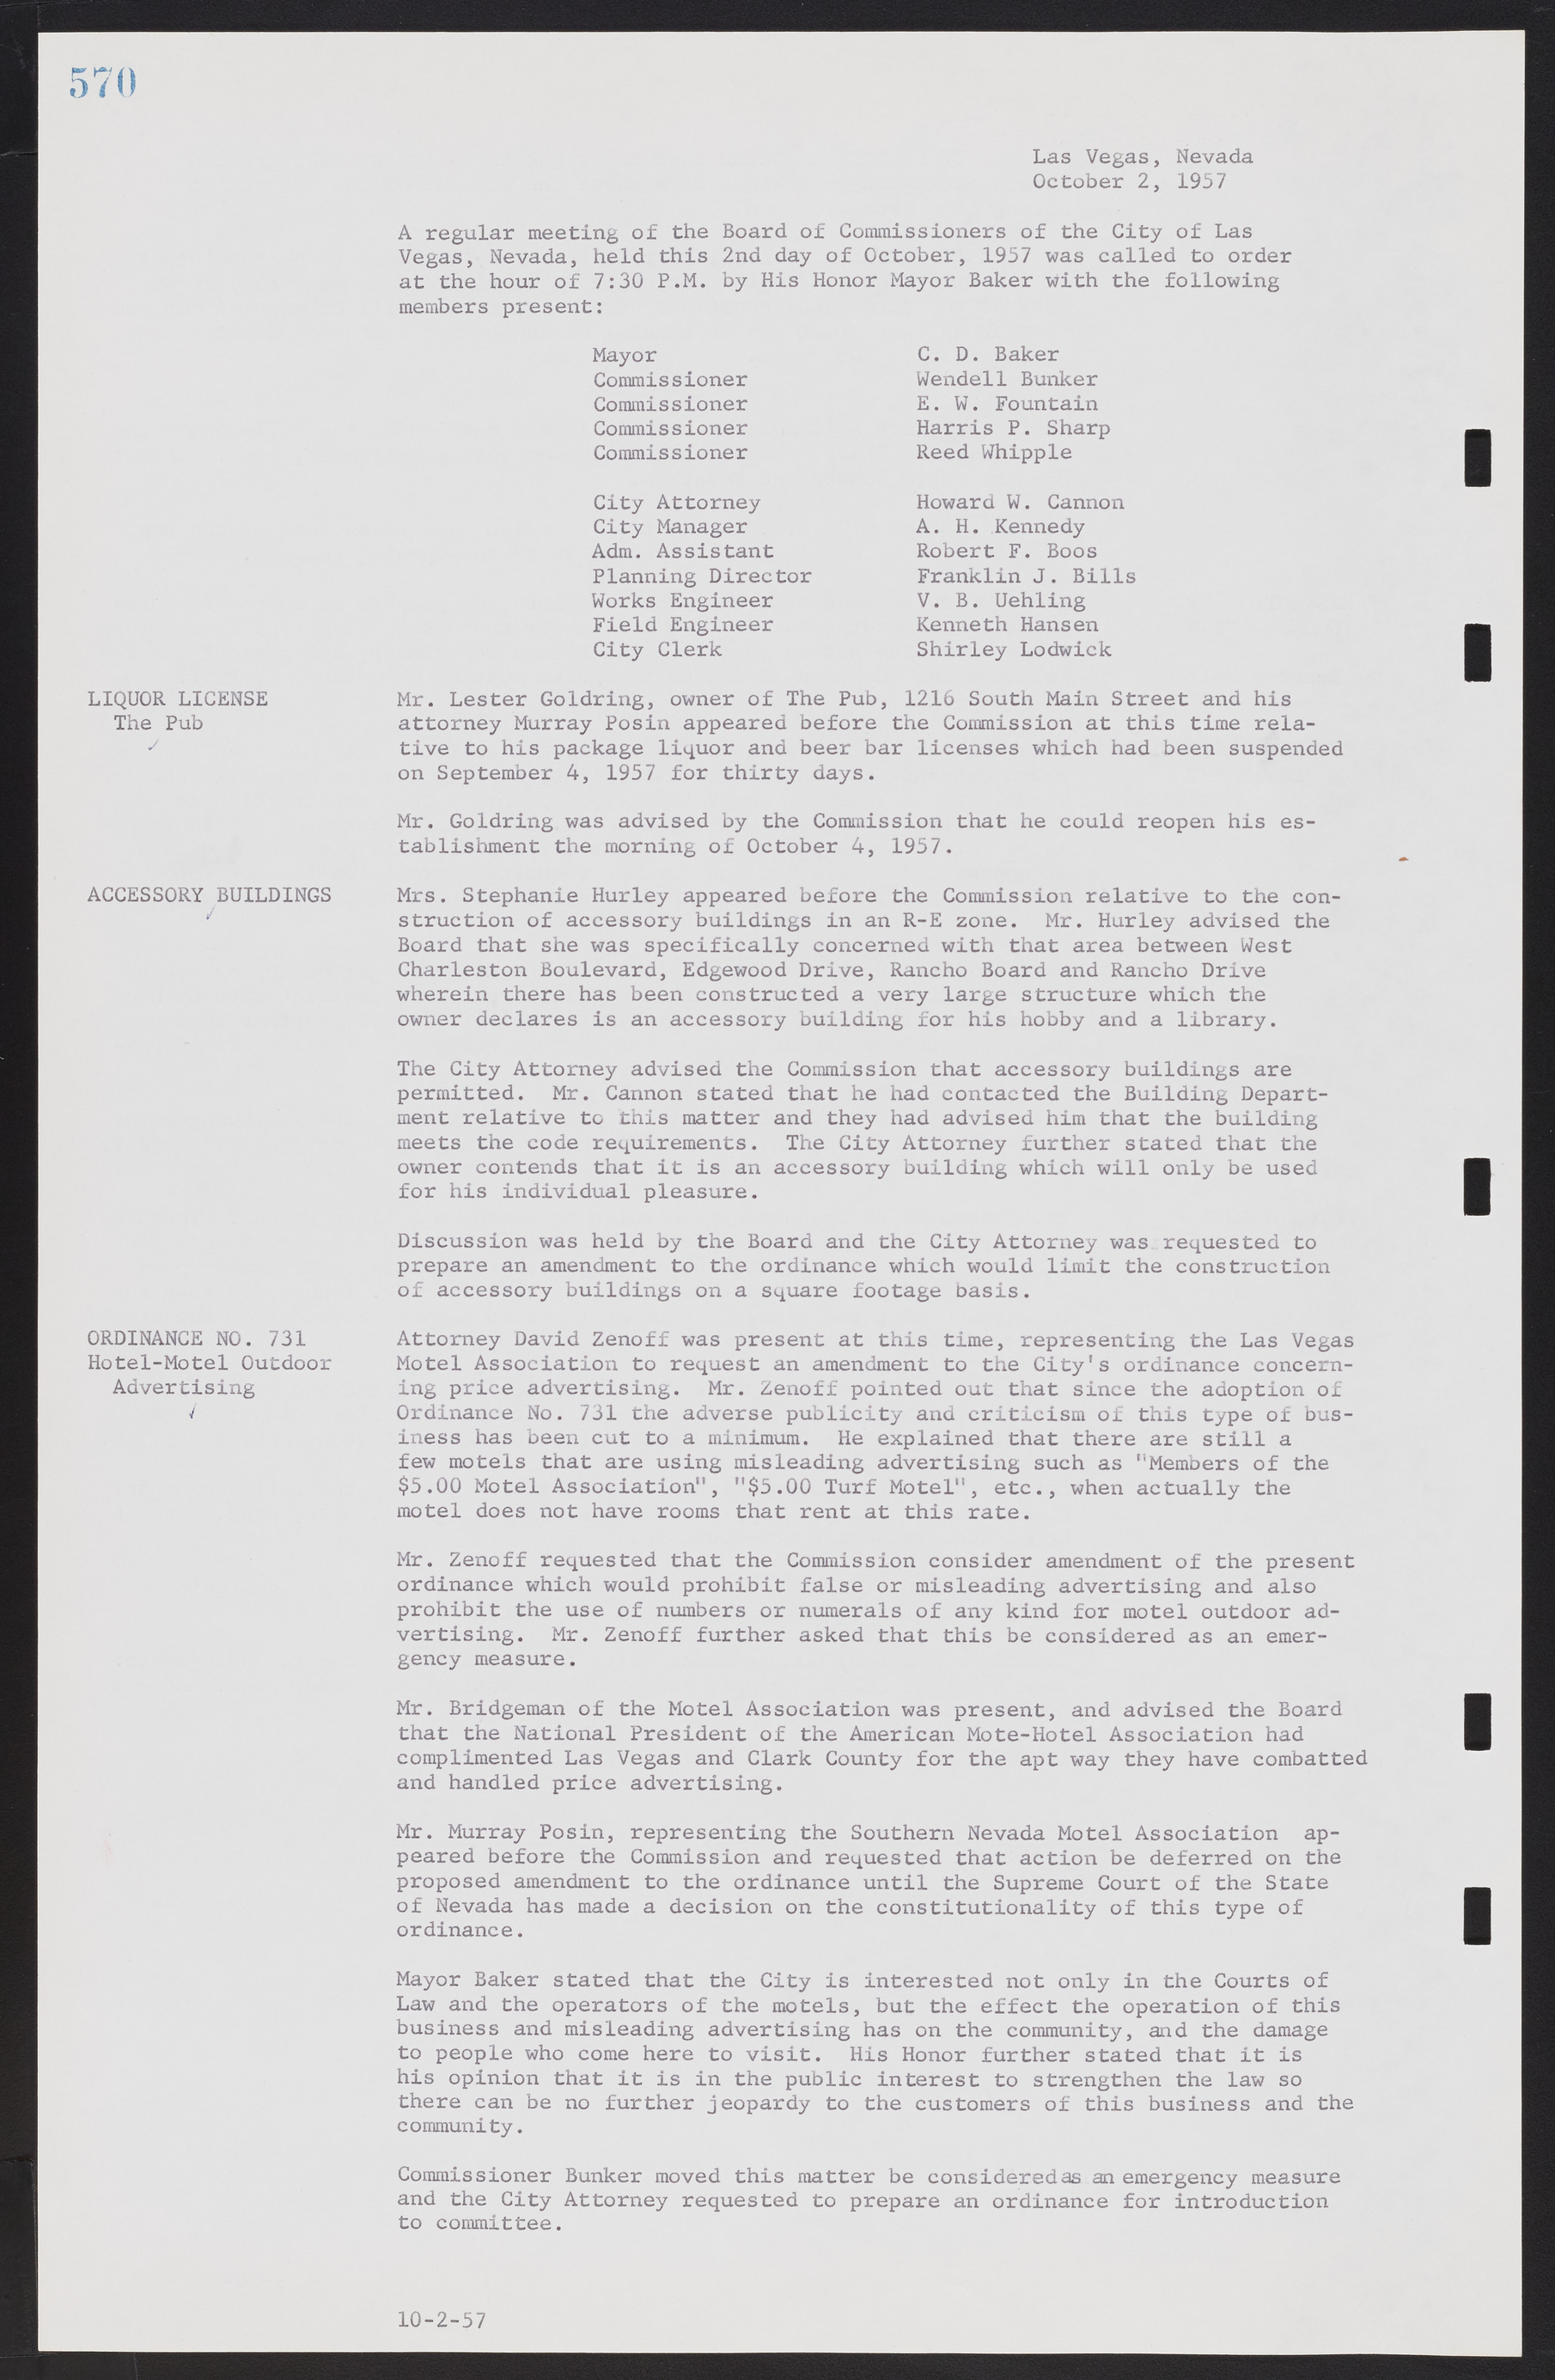 Las Vegas City Commission Minutes, September 21, 1955 to November 20, 1957, lvc000010-590